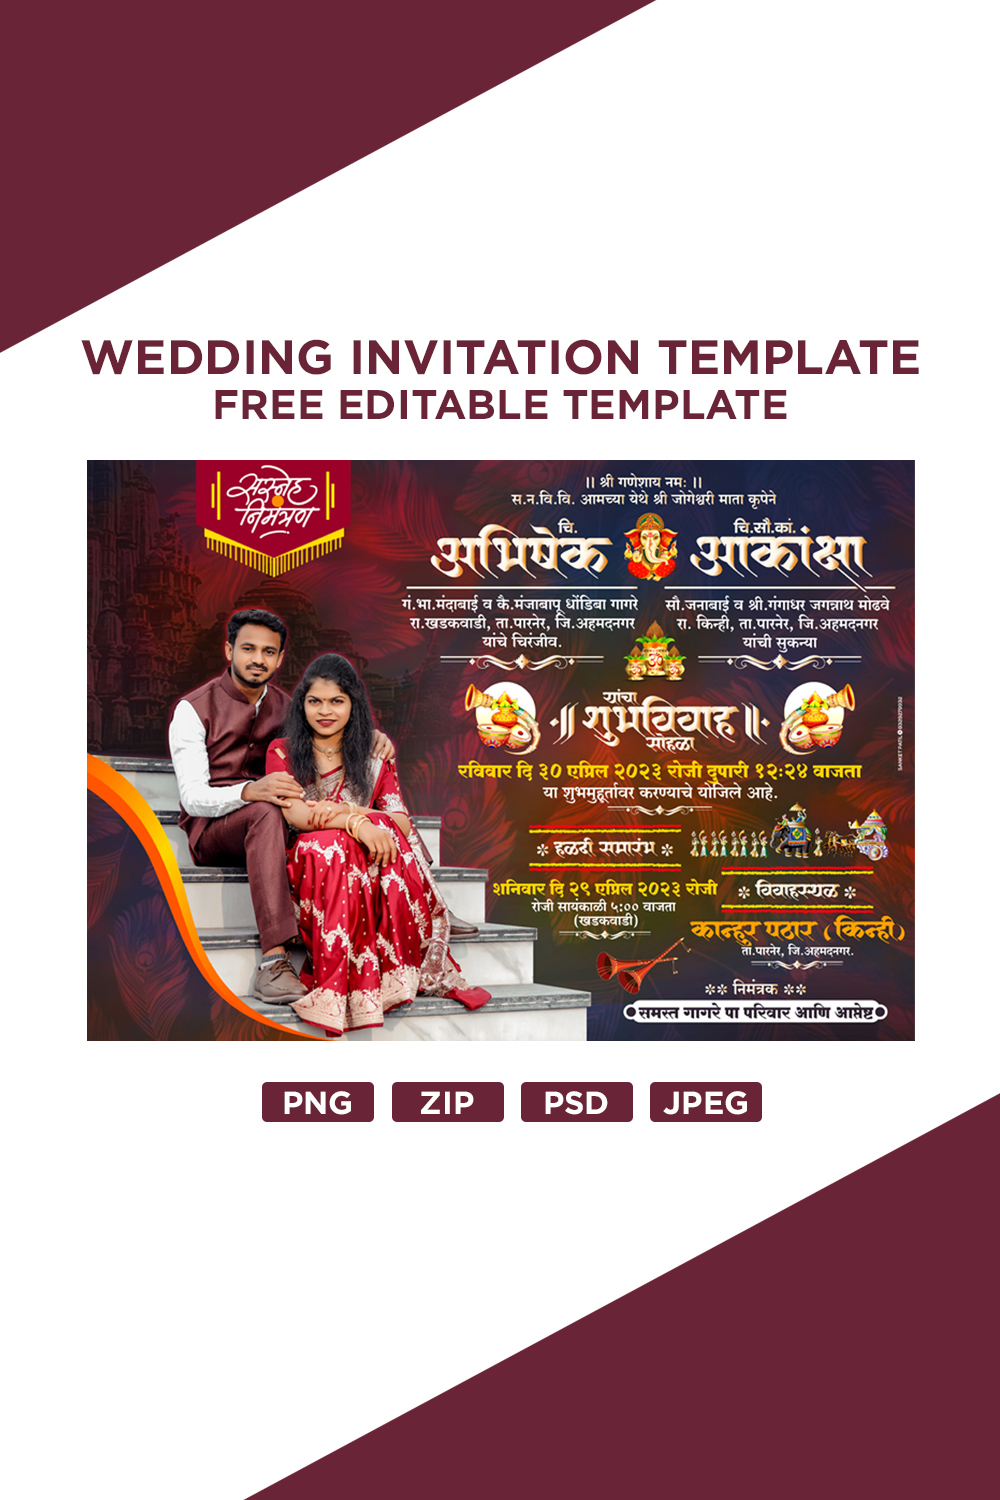 Wedding invitation Editable Template pinterest preview image.